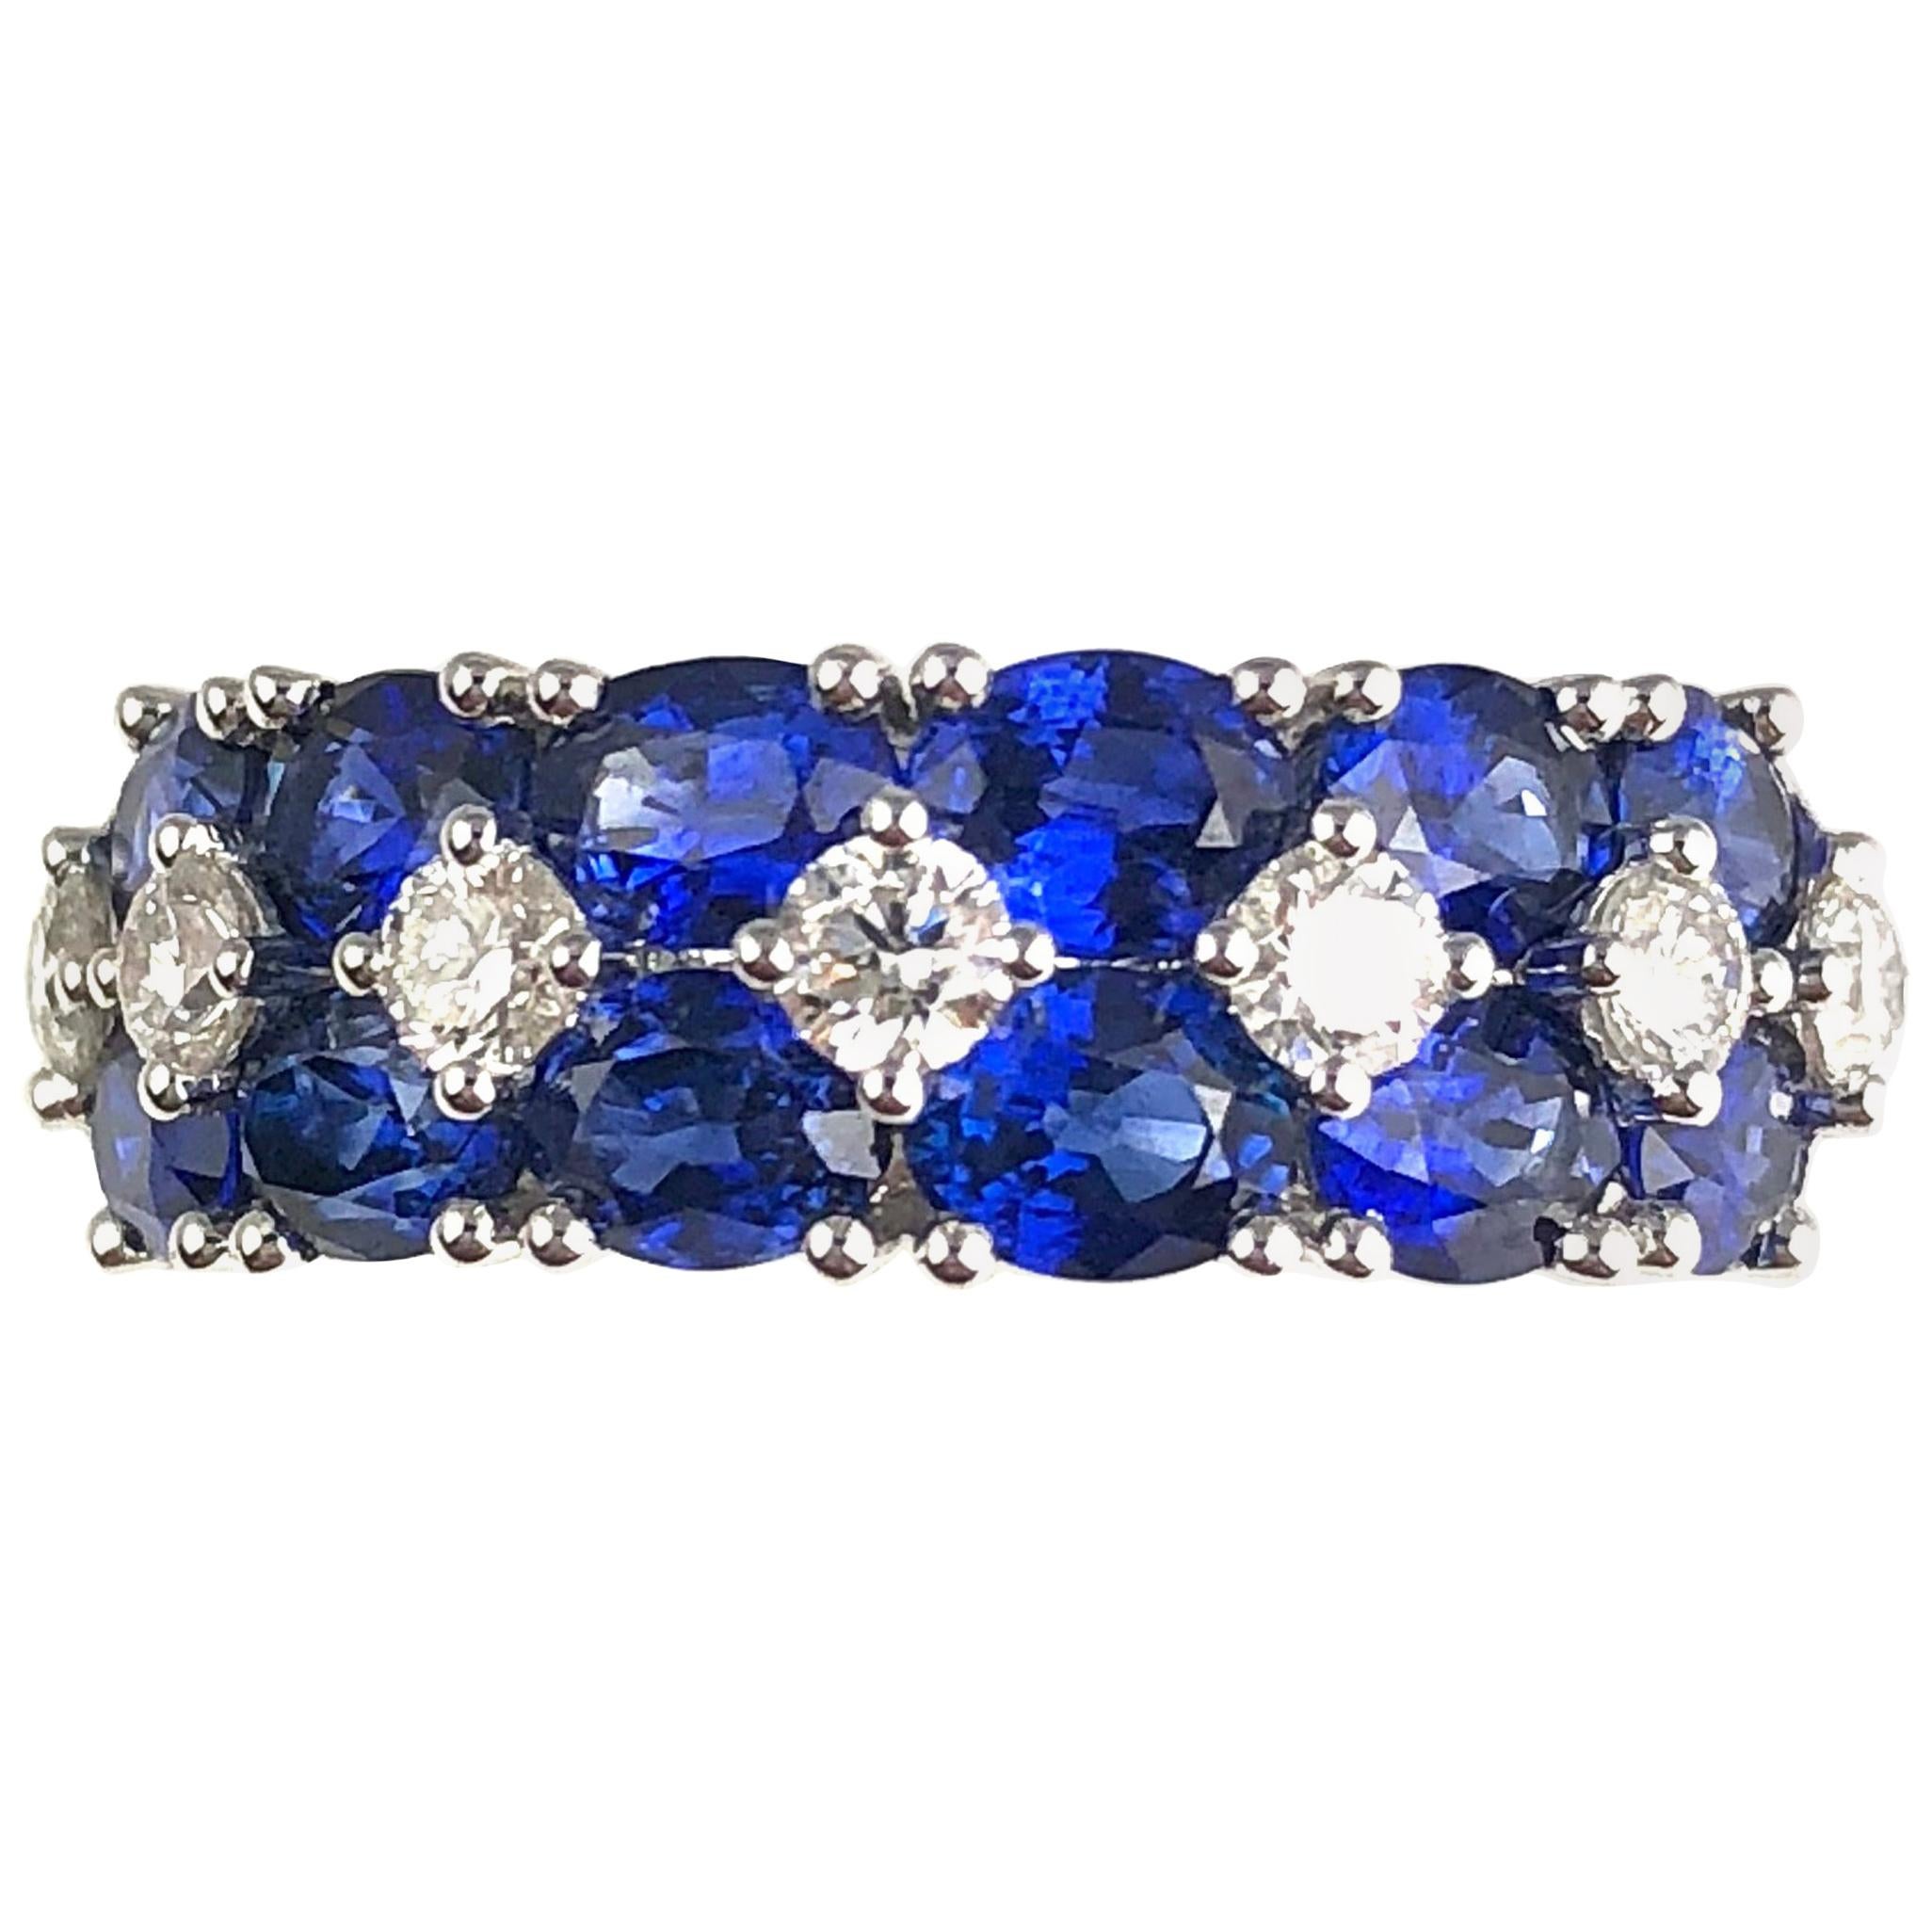 3.64 Carat Blue Sapphire and 0.52 Carat Diamond Fashion Ring in 18 Karat Gold